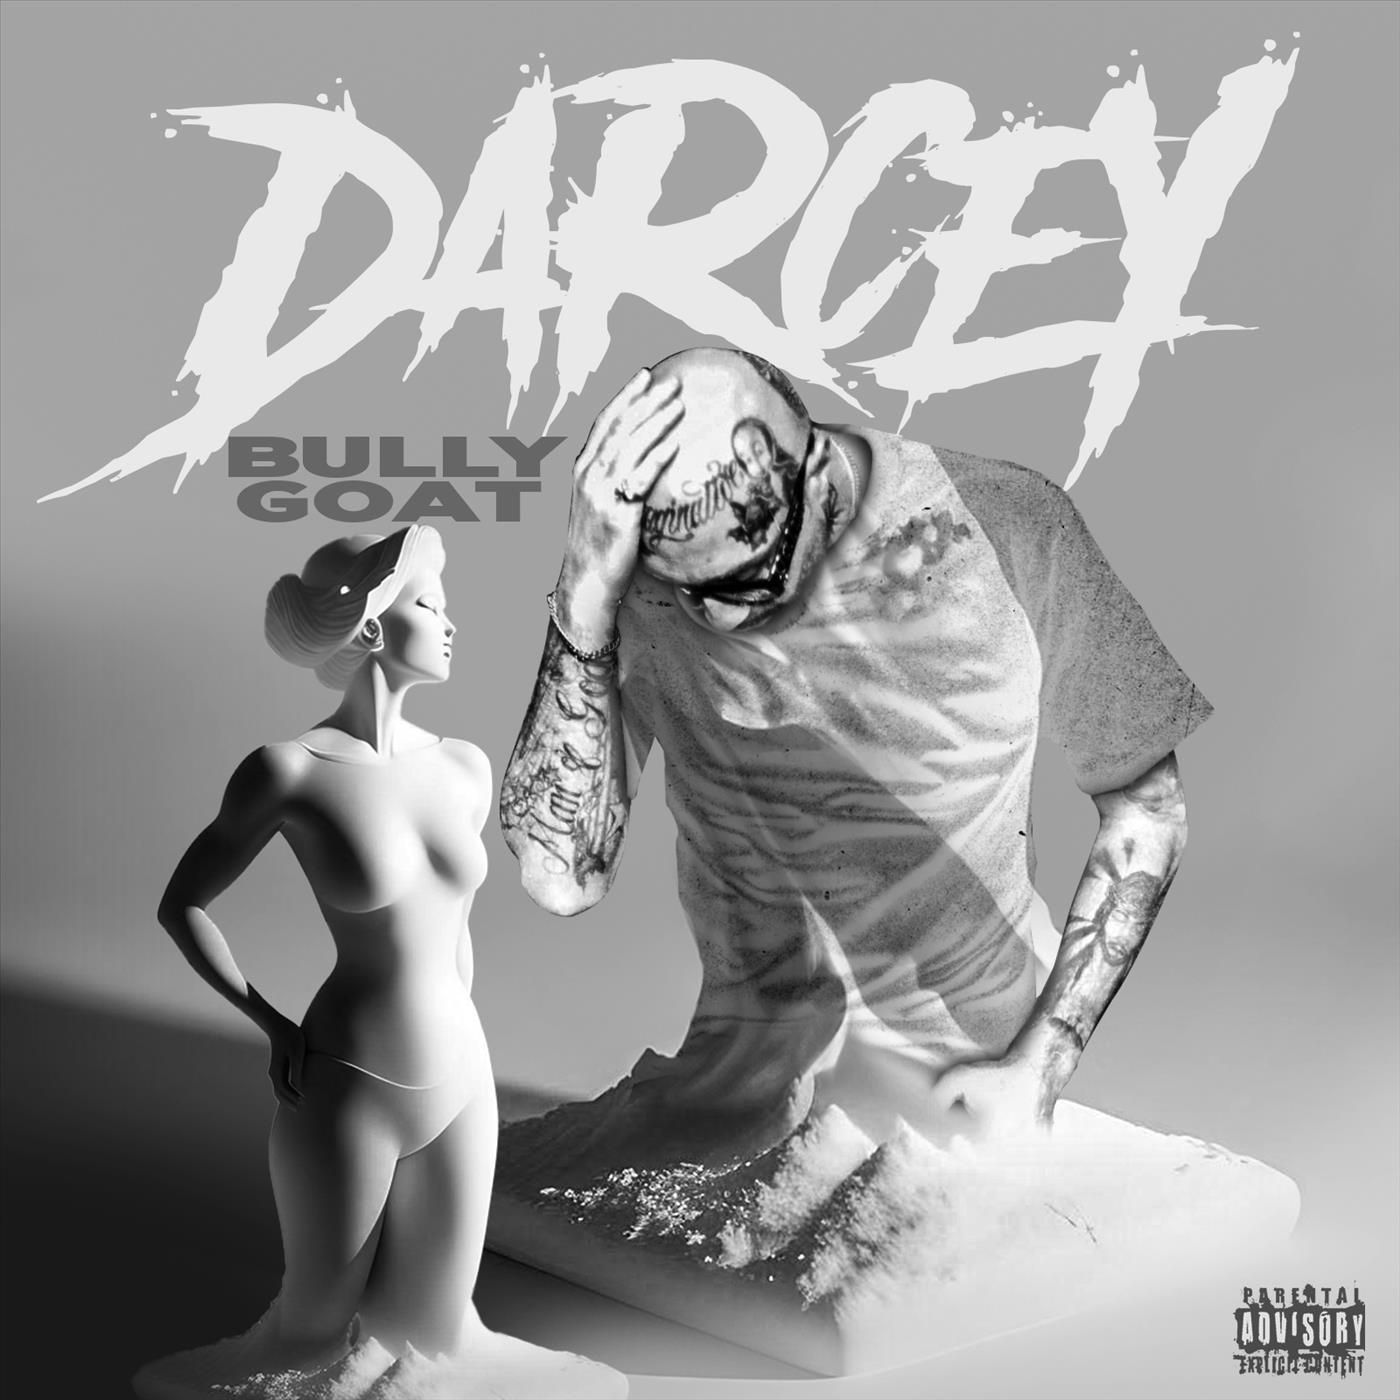 Bully Goat - Darcey